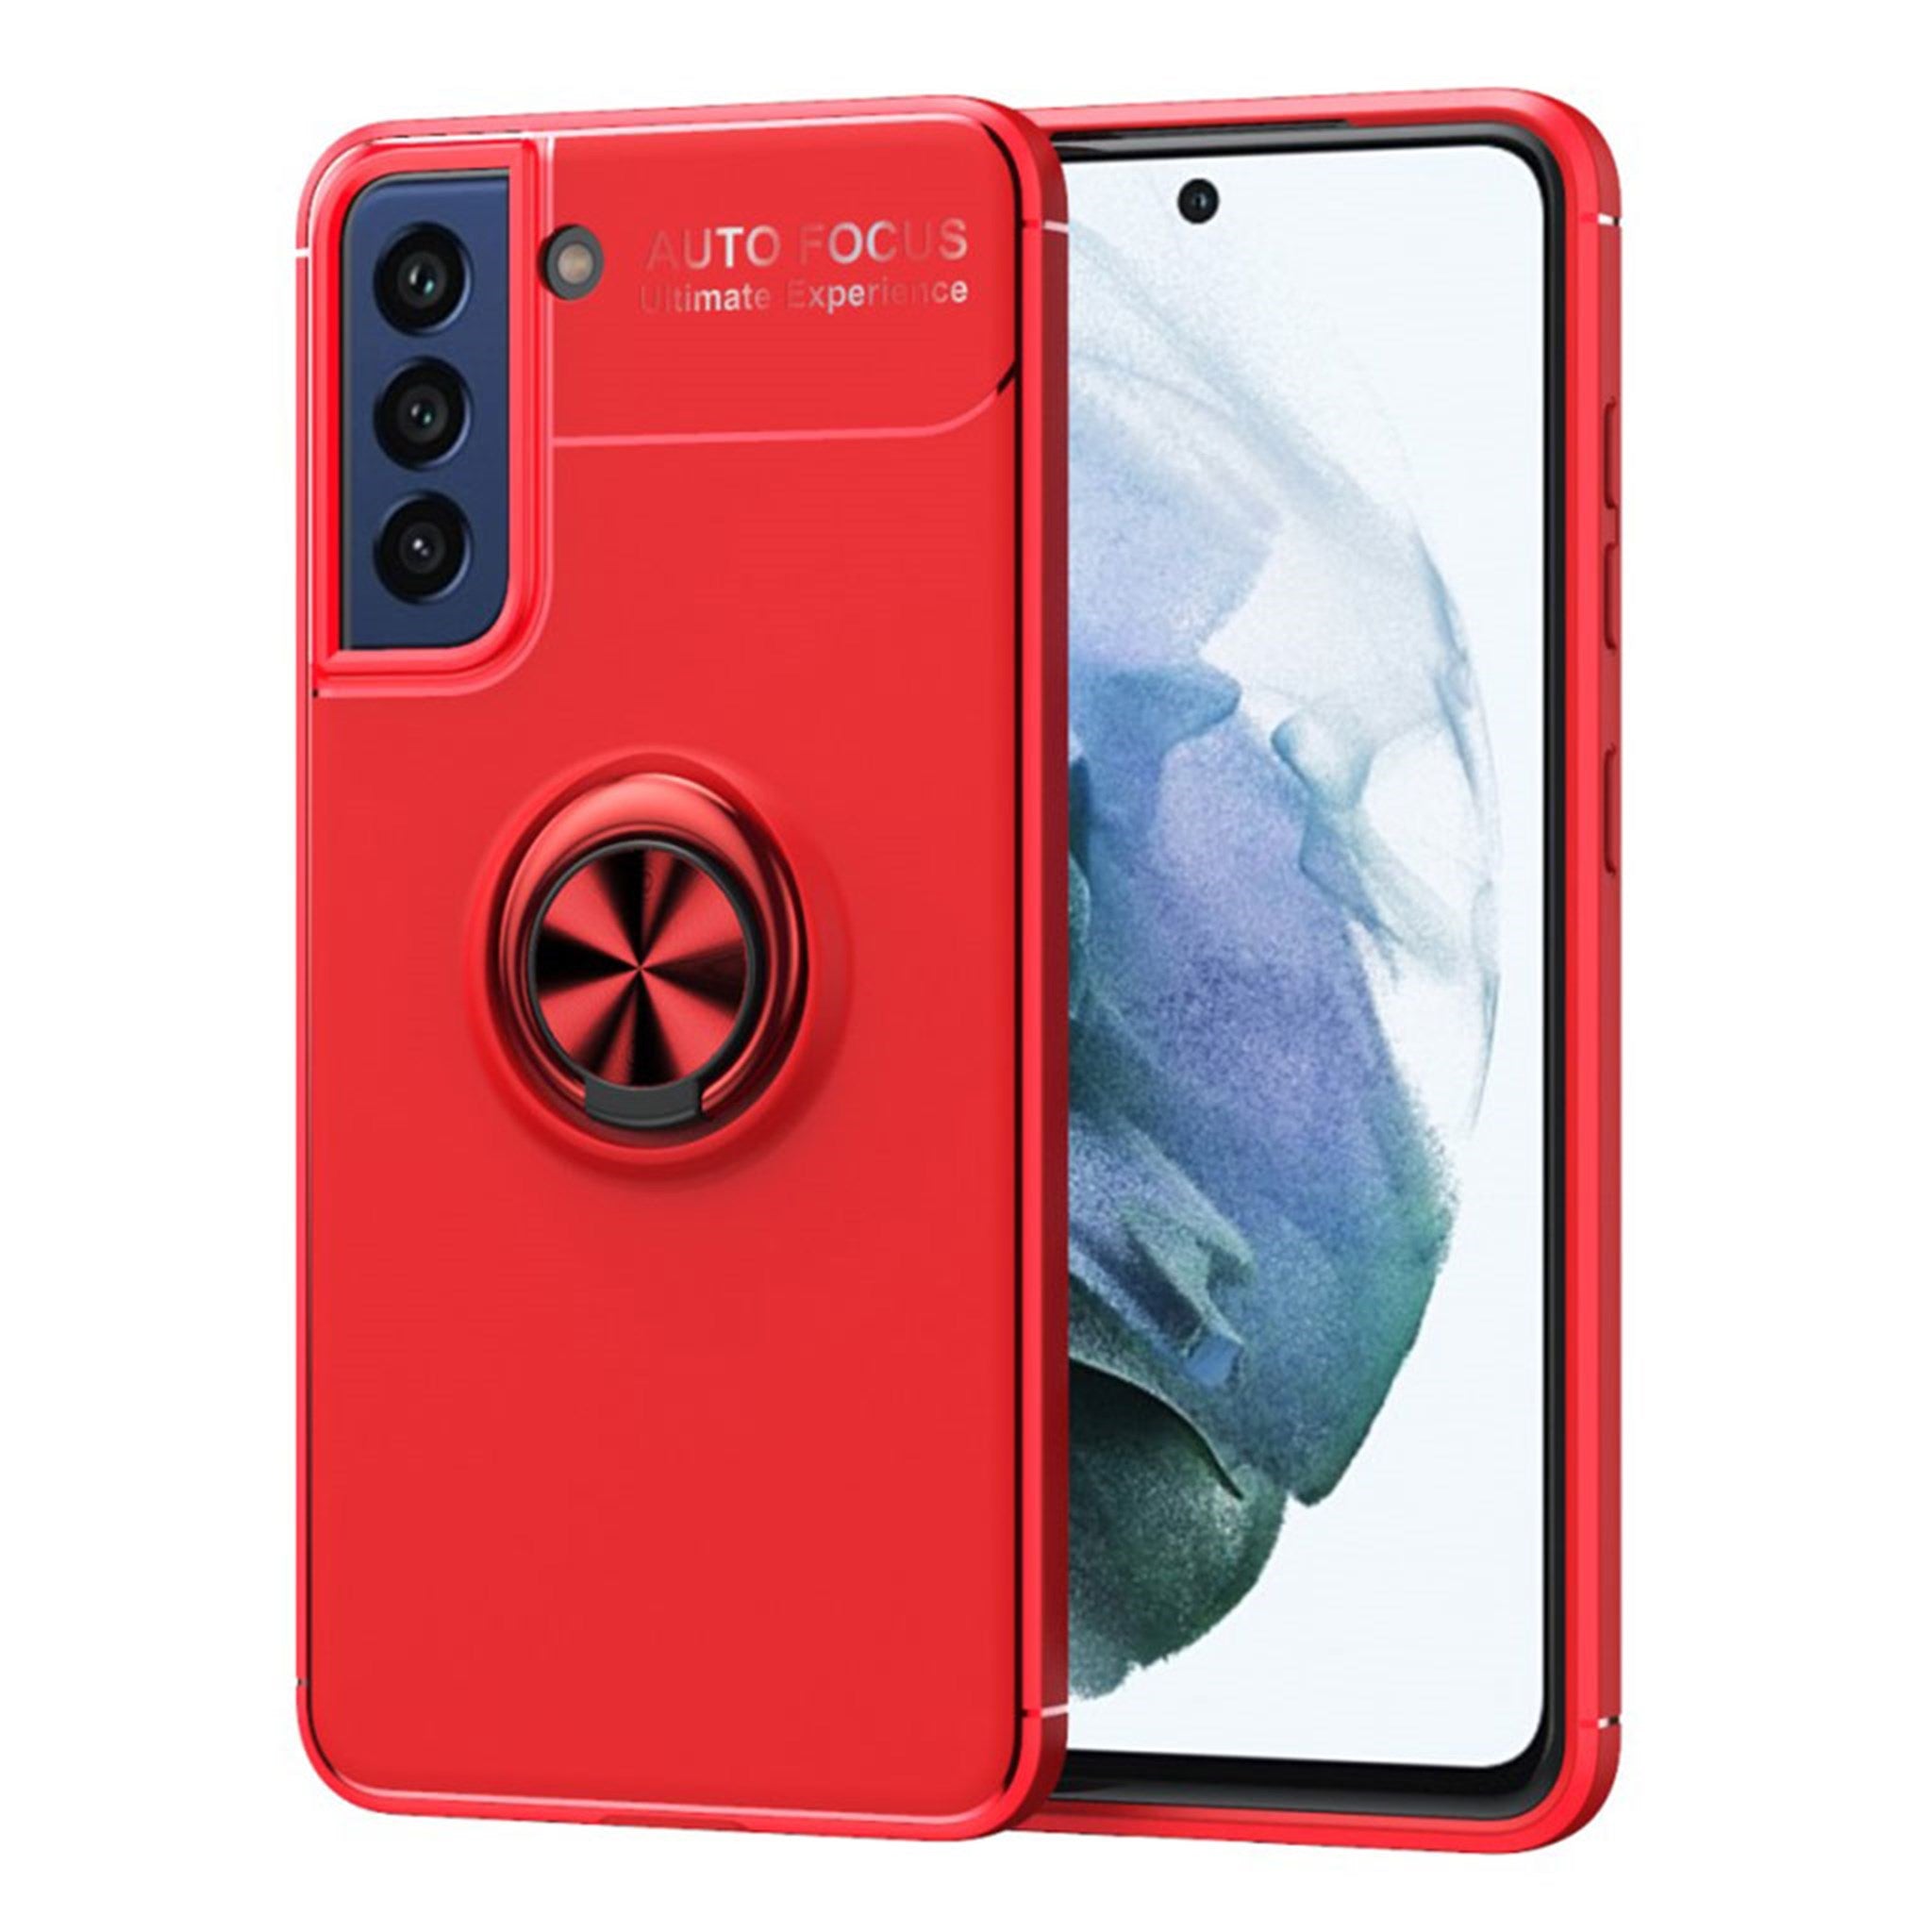 Ringo case - Samsung Galaxy S21 FE - Red